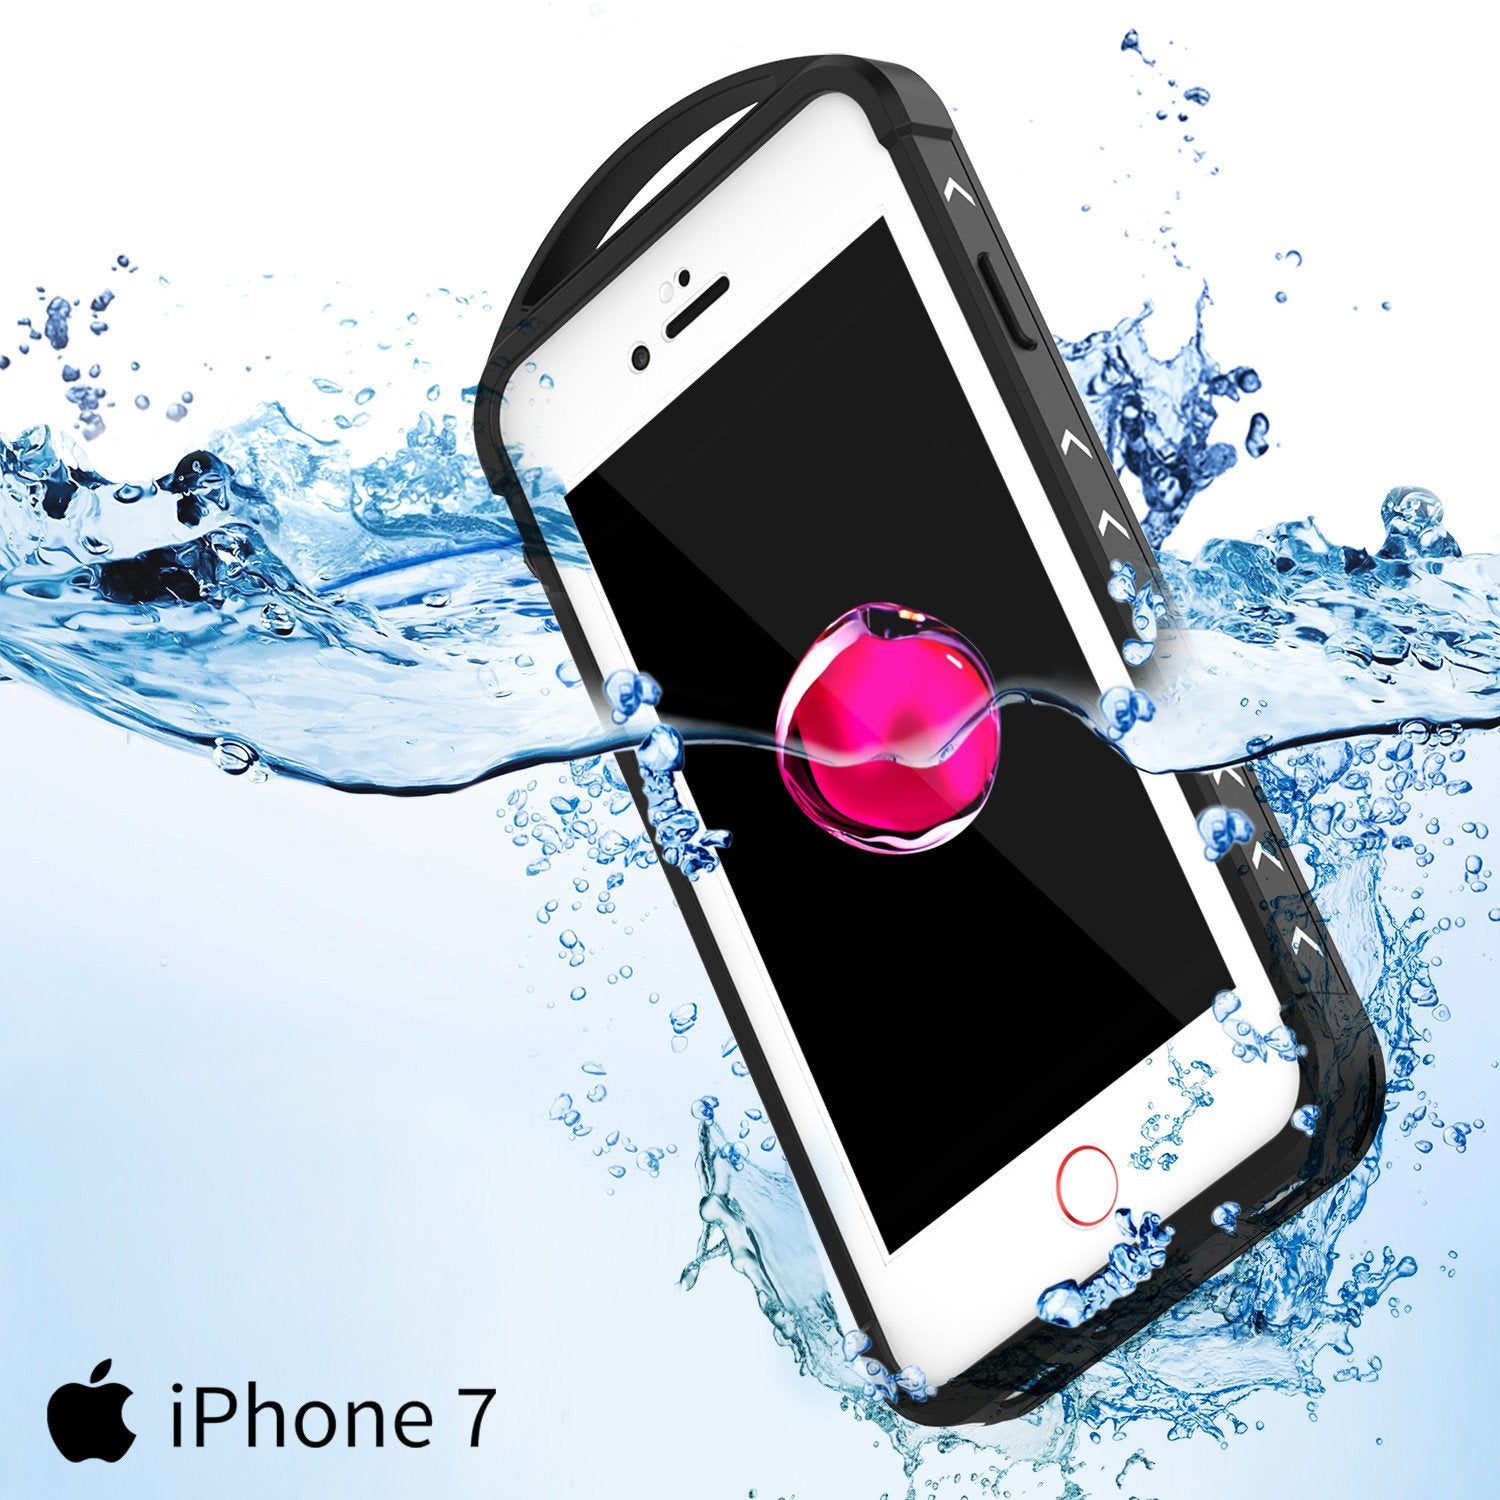 iPhone 7 Waterproof Case, Punkcase ALPINE Series, White | Heavy Duty Armor Cover